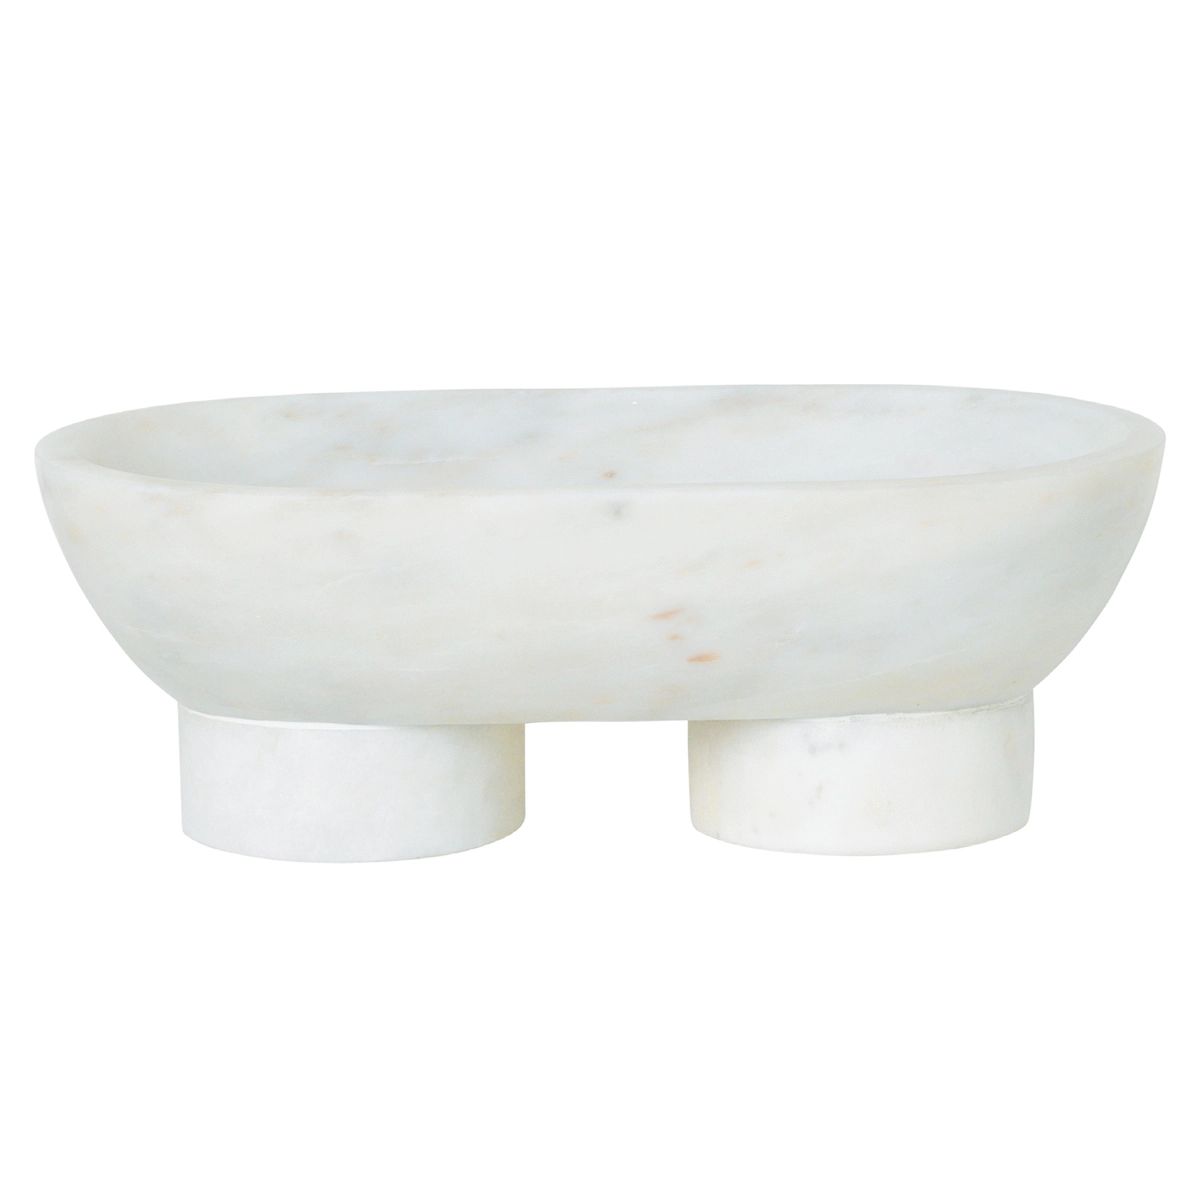 Alza bowl, white marble | Finnish Design Shop (FI)